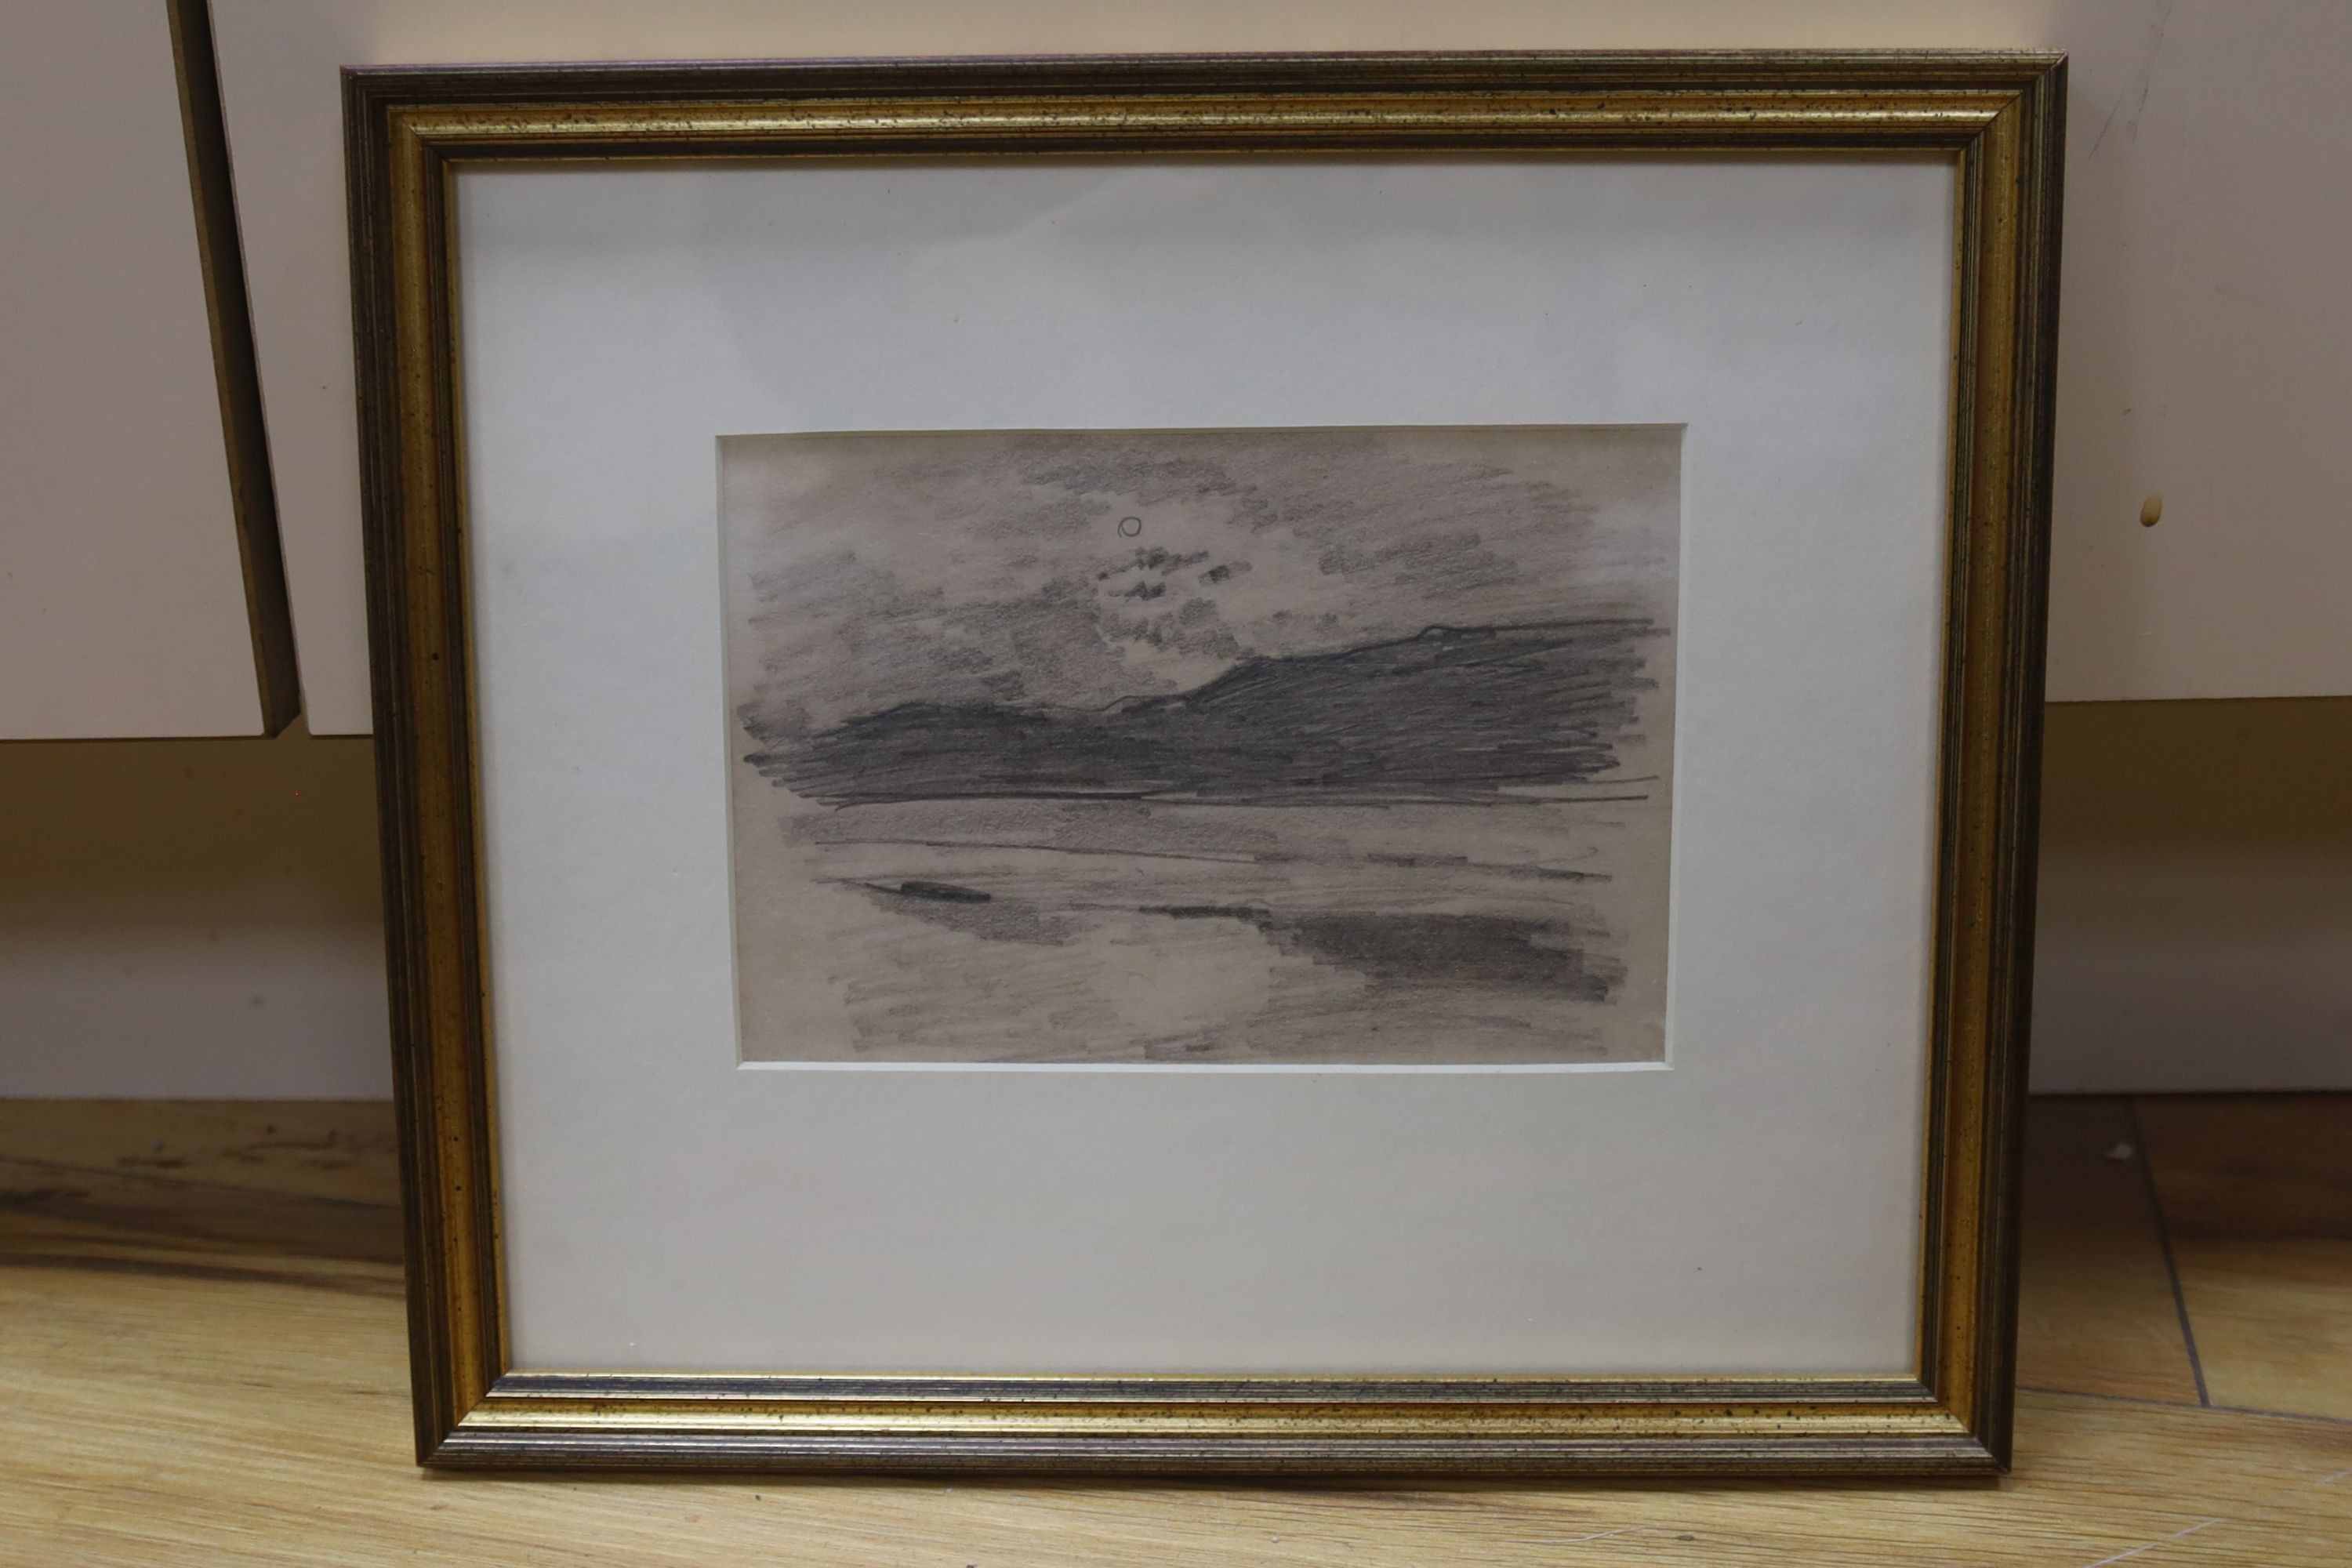 Arthur Rackham (1867-1939), pencil sketch, Open landscape, Abbott & Holder label verso, 11 x 16cm